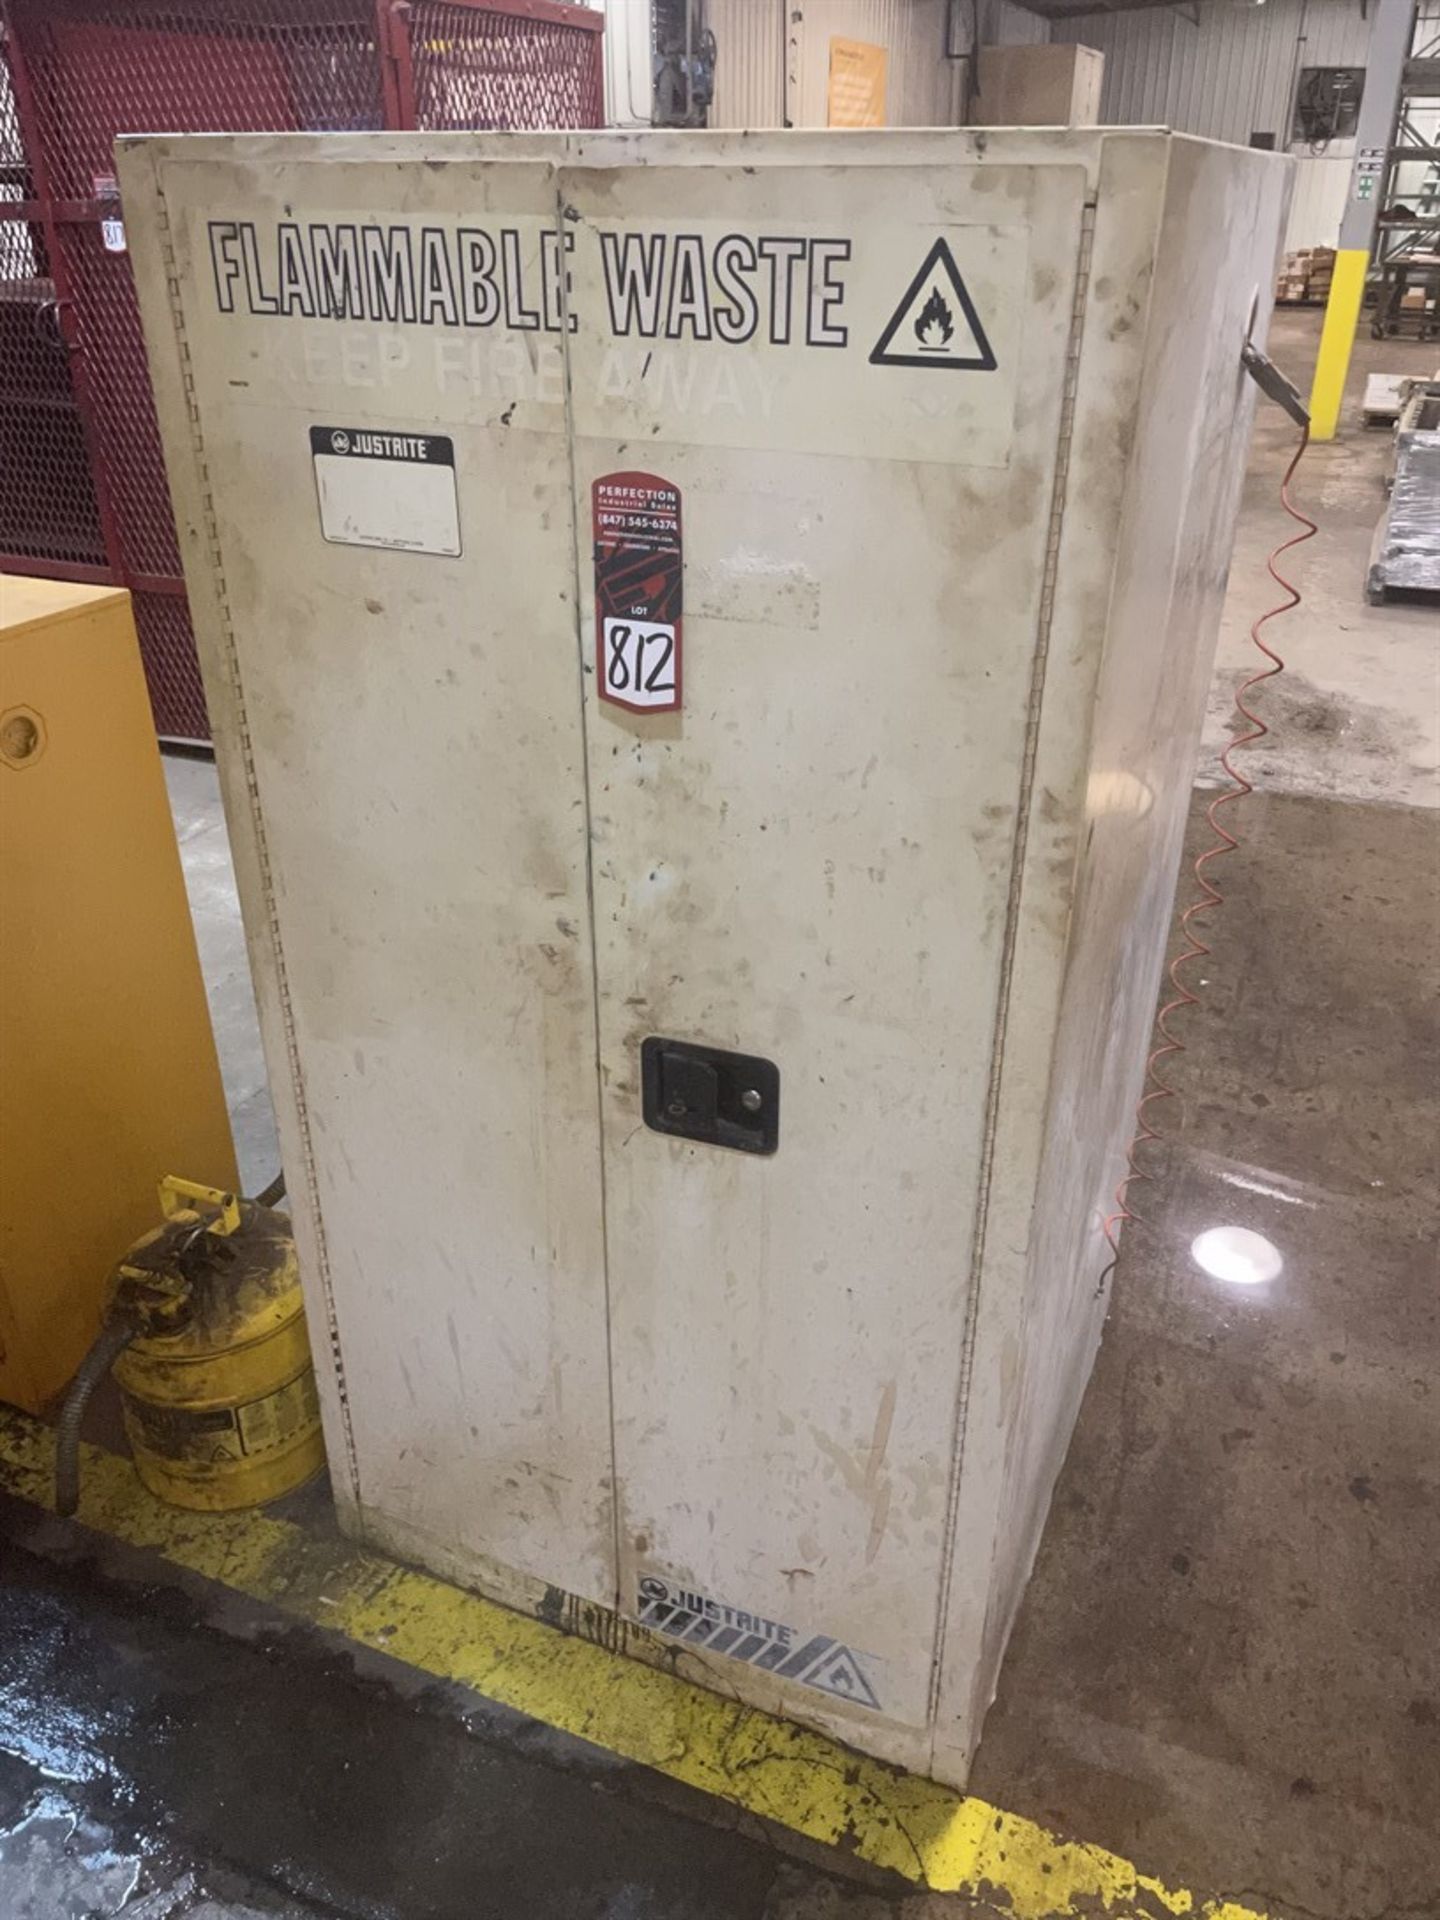 Justrite 896900 60 Gallon Flammable Cabinet